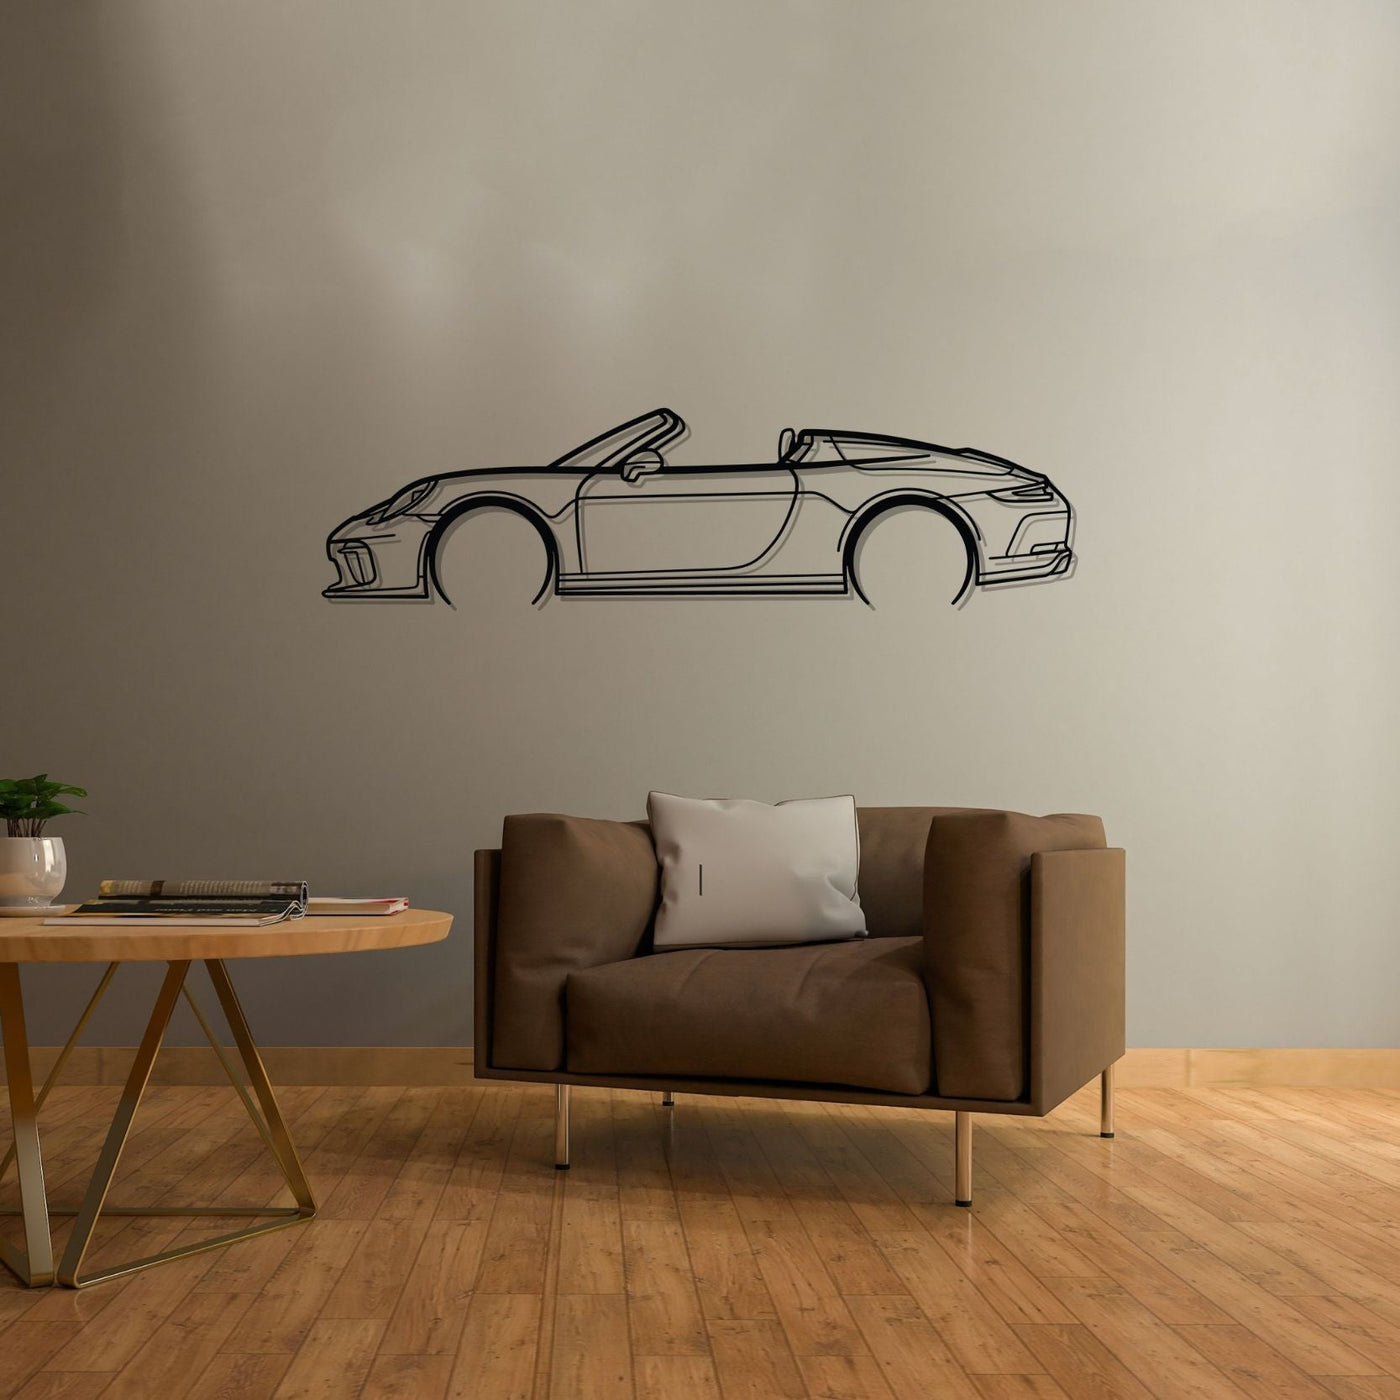 911 Speedster model 991 Detailed Silhouette Metal Wall Art